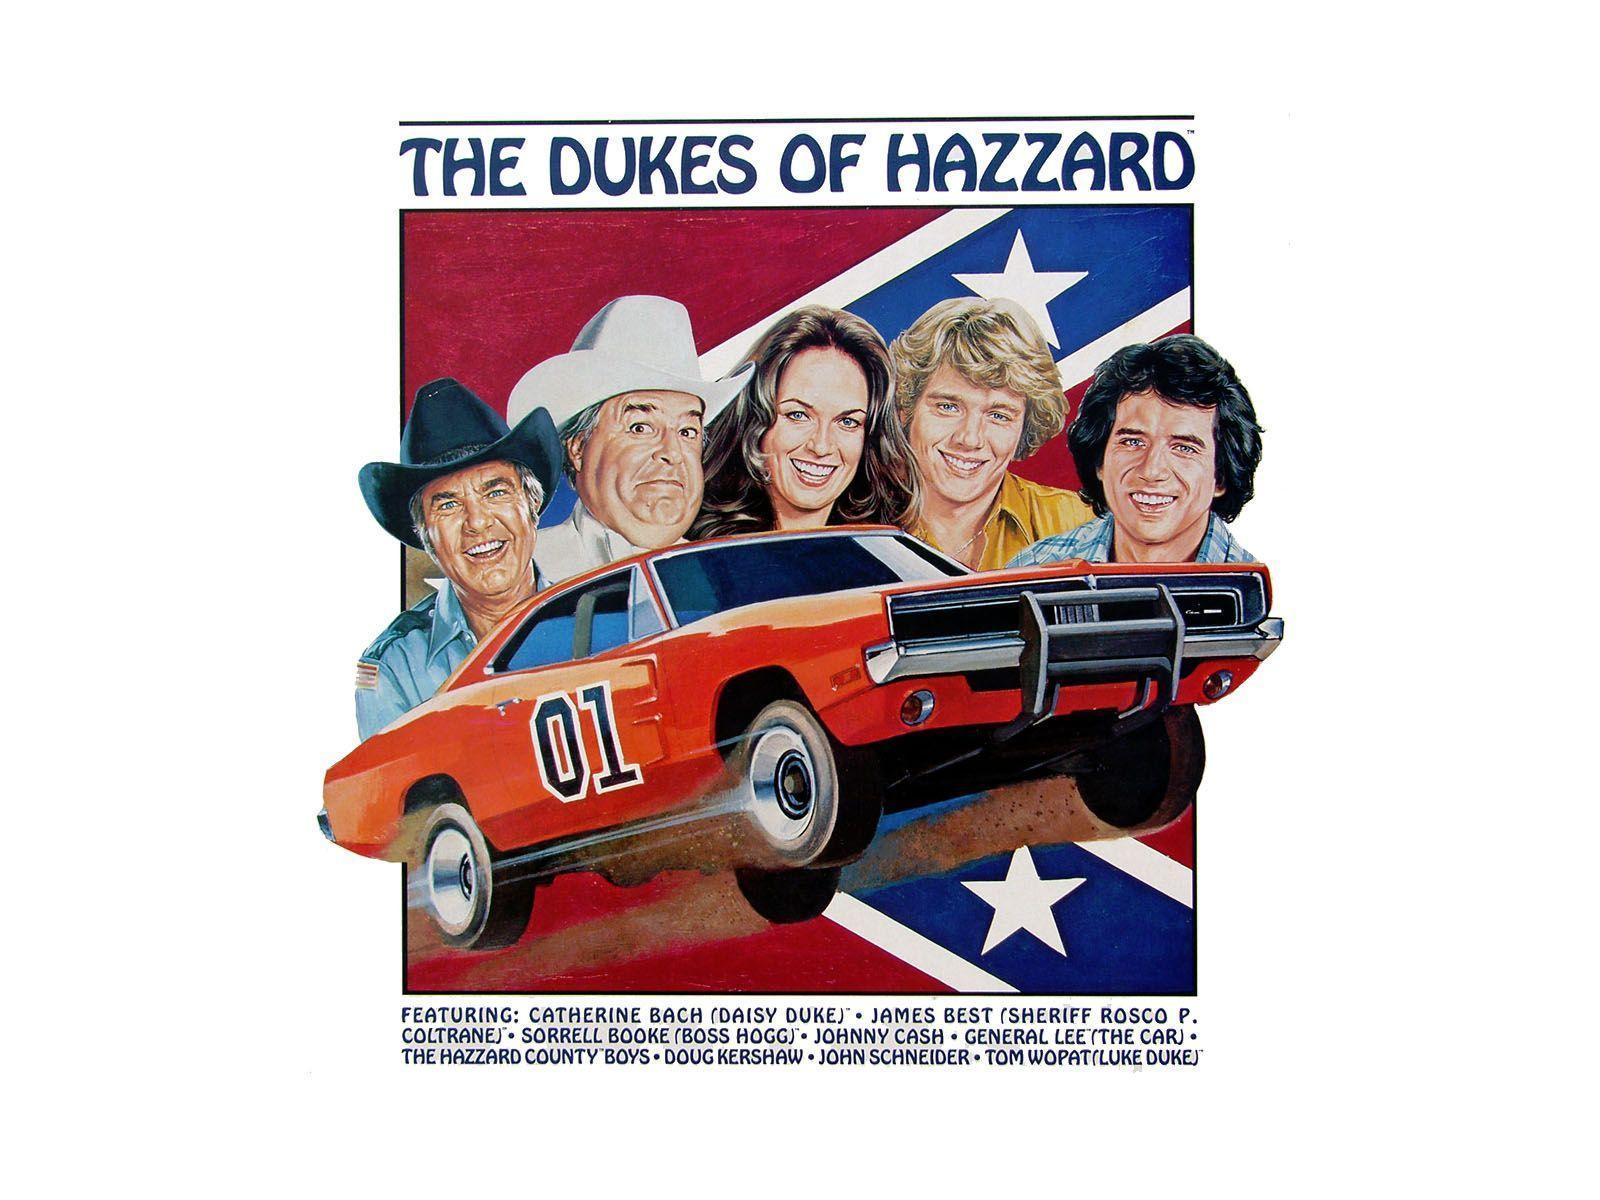 The Dukes of Hazzard Theme Song. Movie Theme Songs & TV Soundtracks